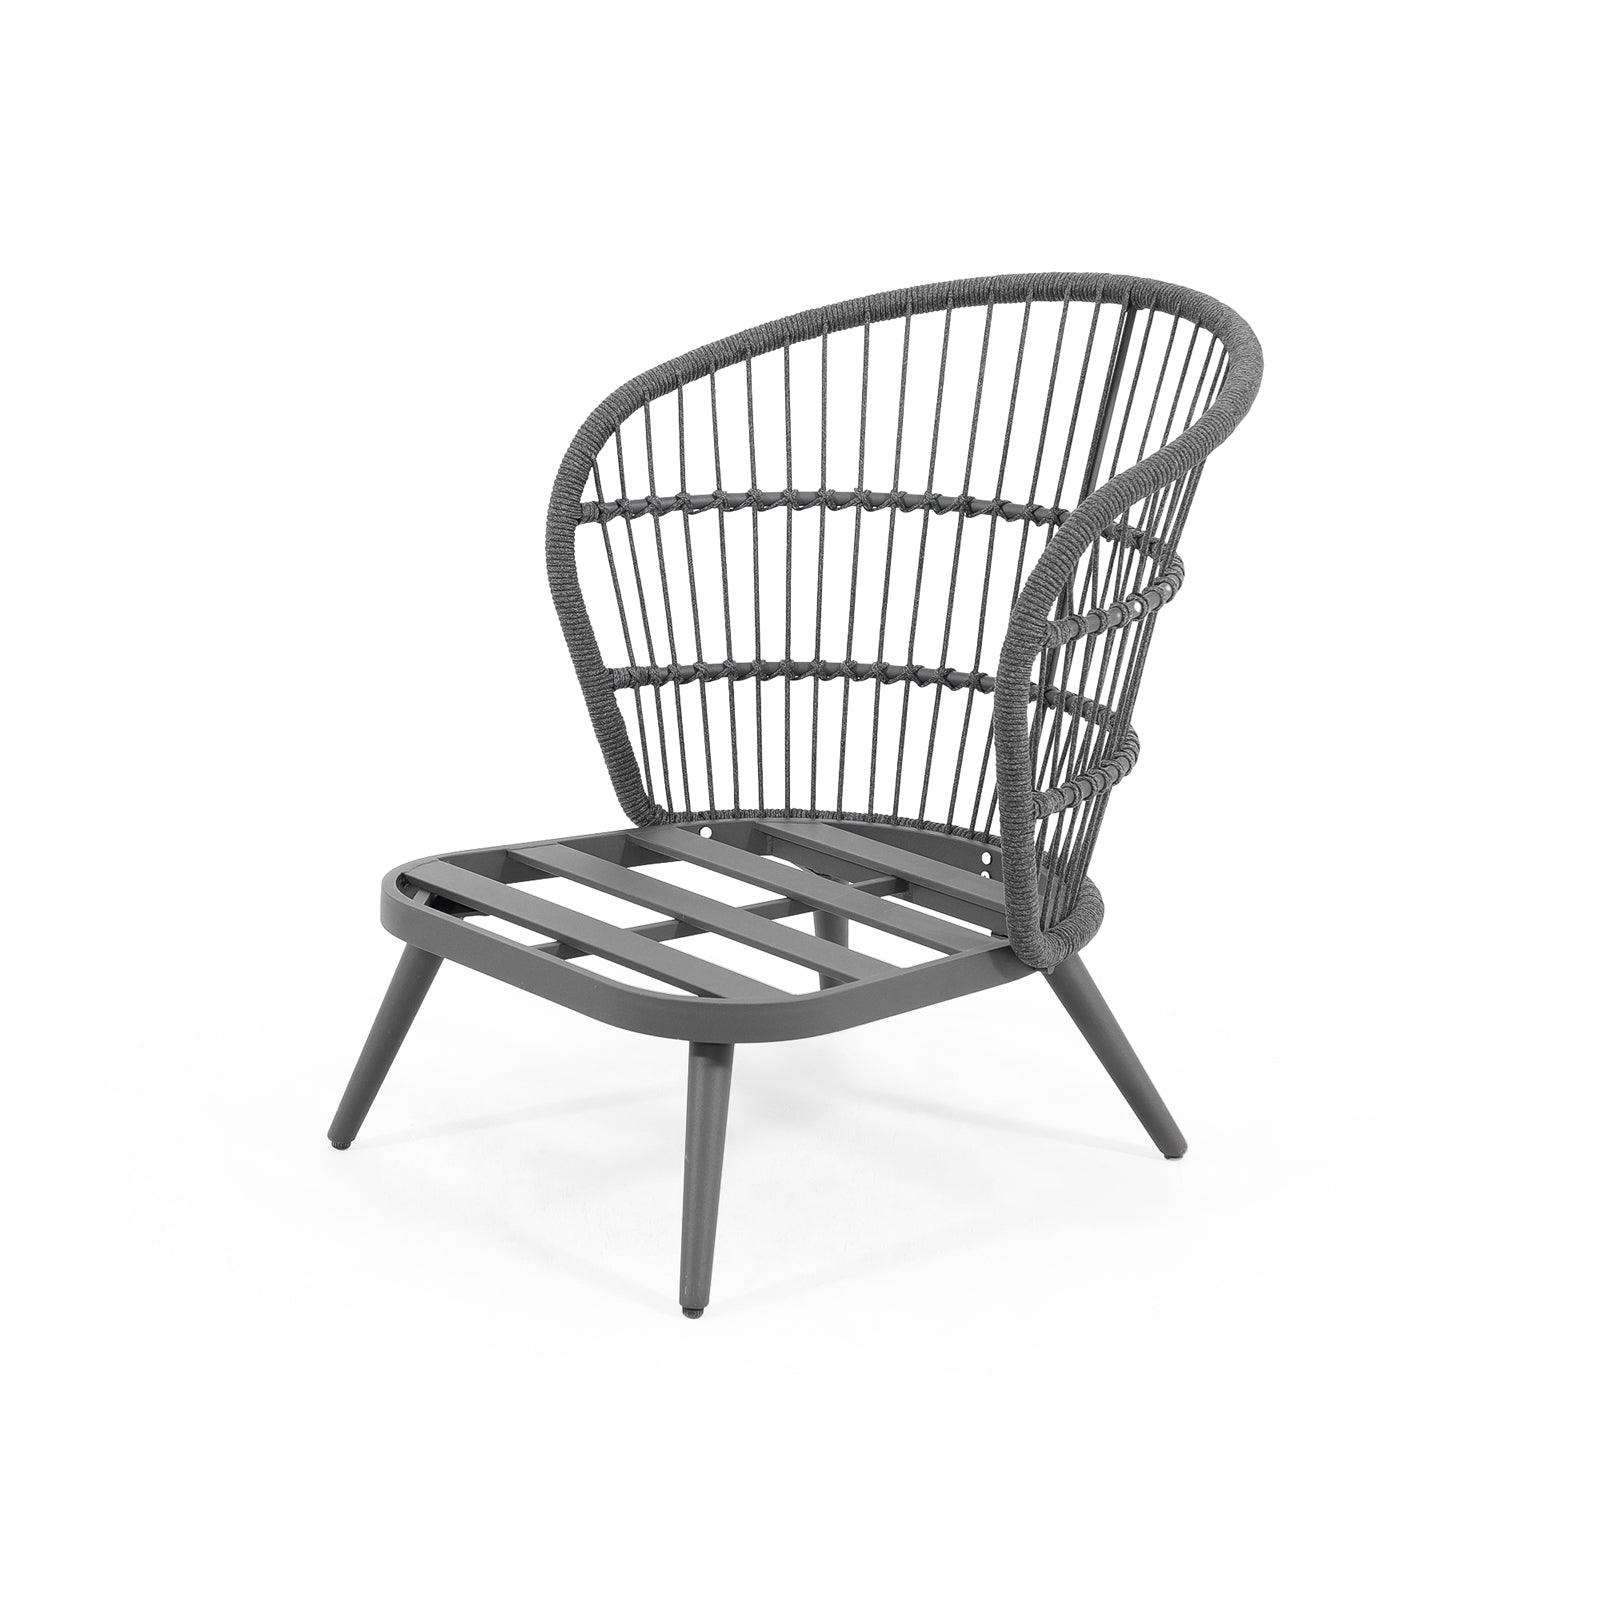 Comino grey aluminum Sofa with backrest rope design, shell-shaped design, frame without cushion-Jardina Furniture